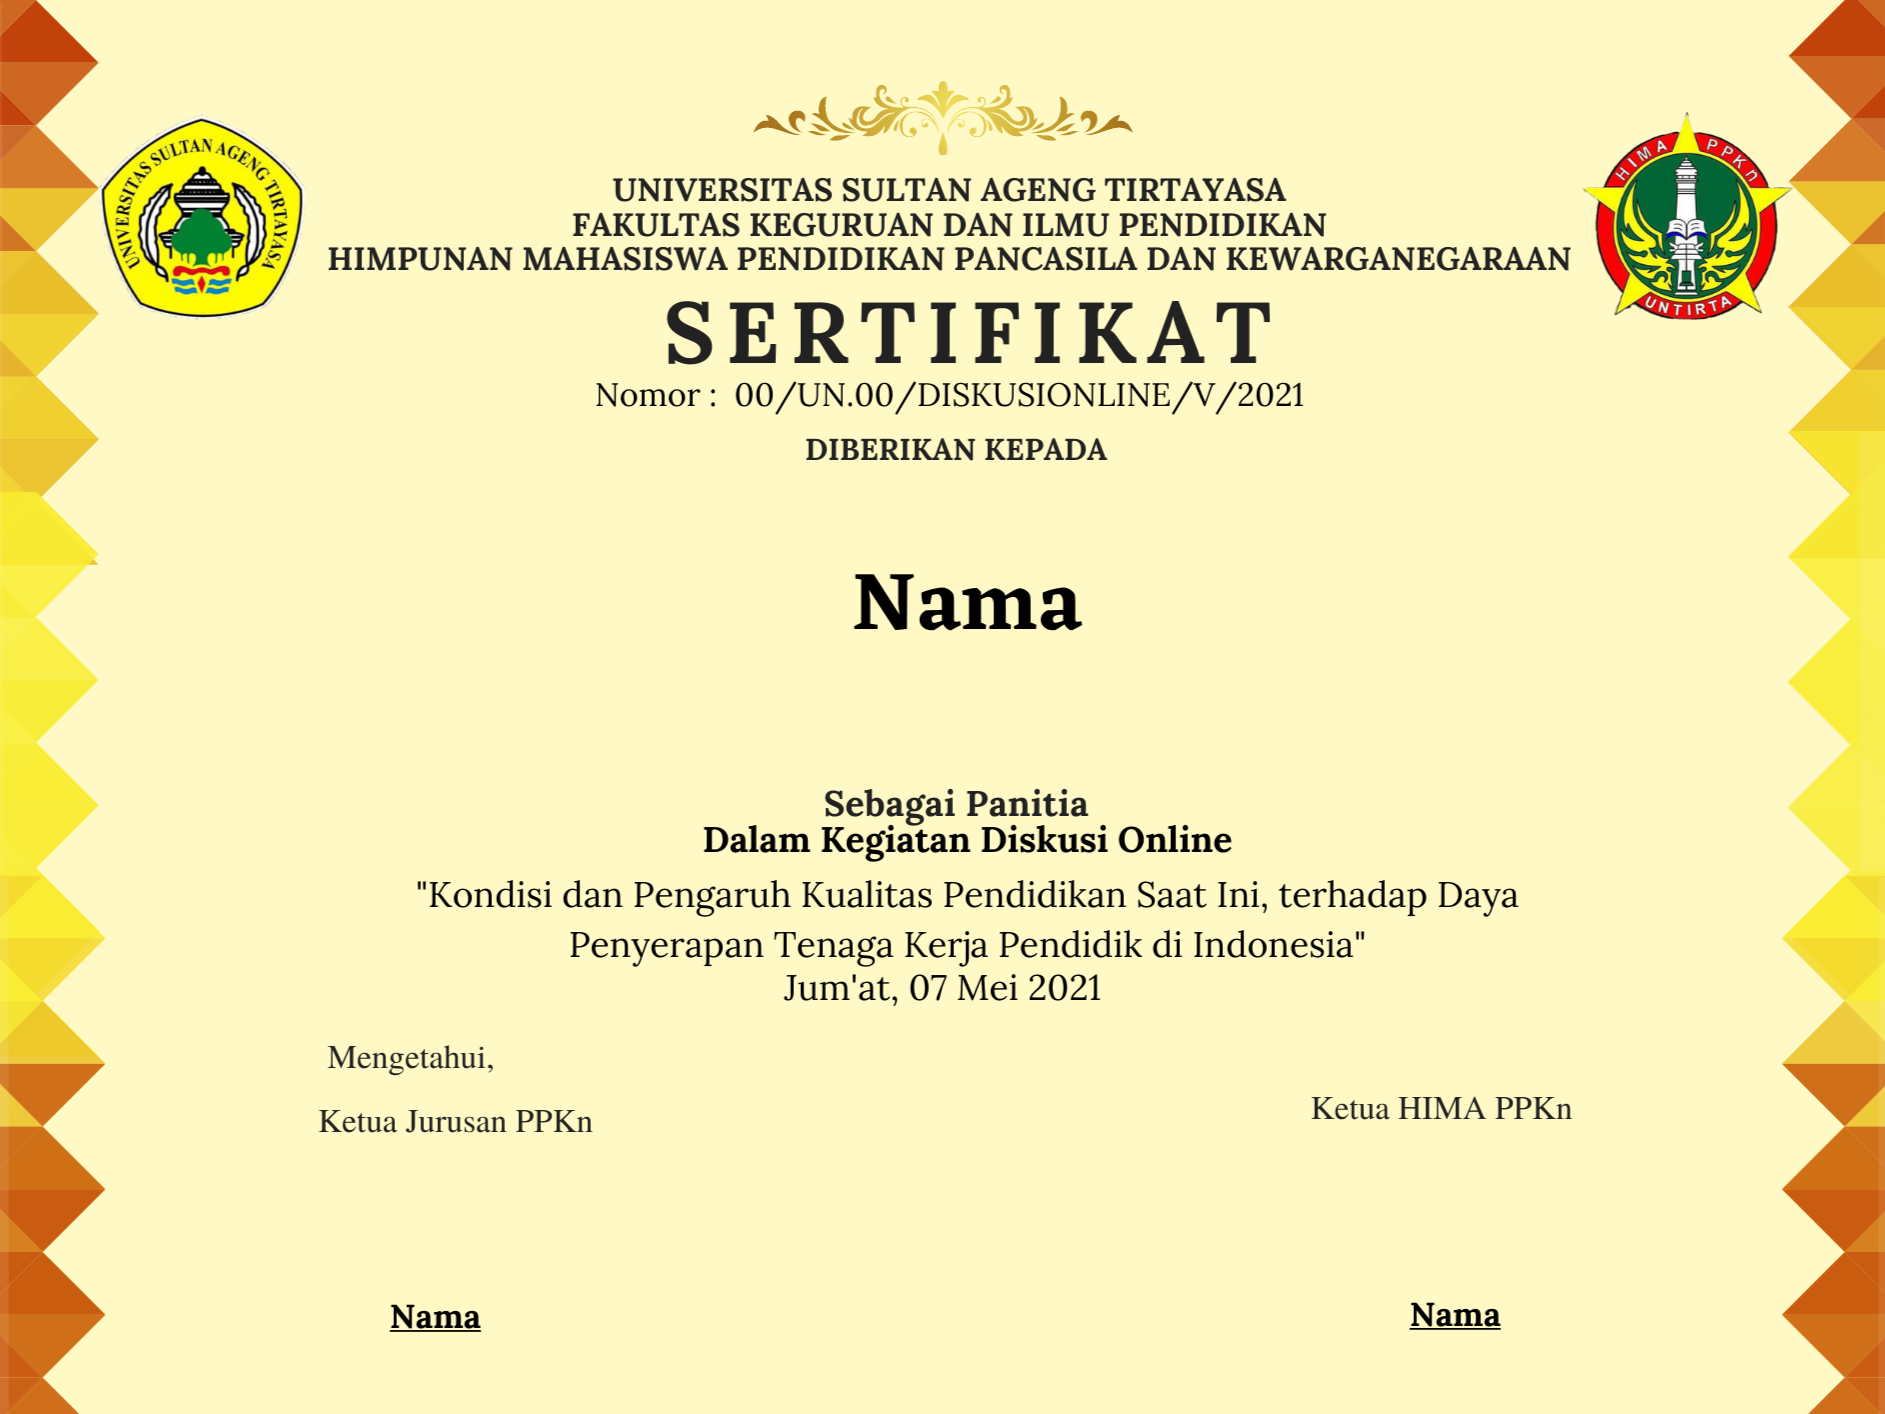 Cover of certificate design.